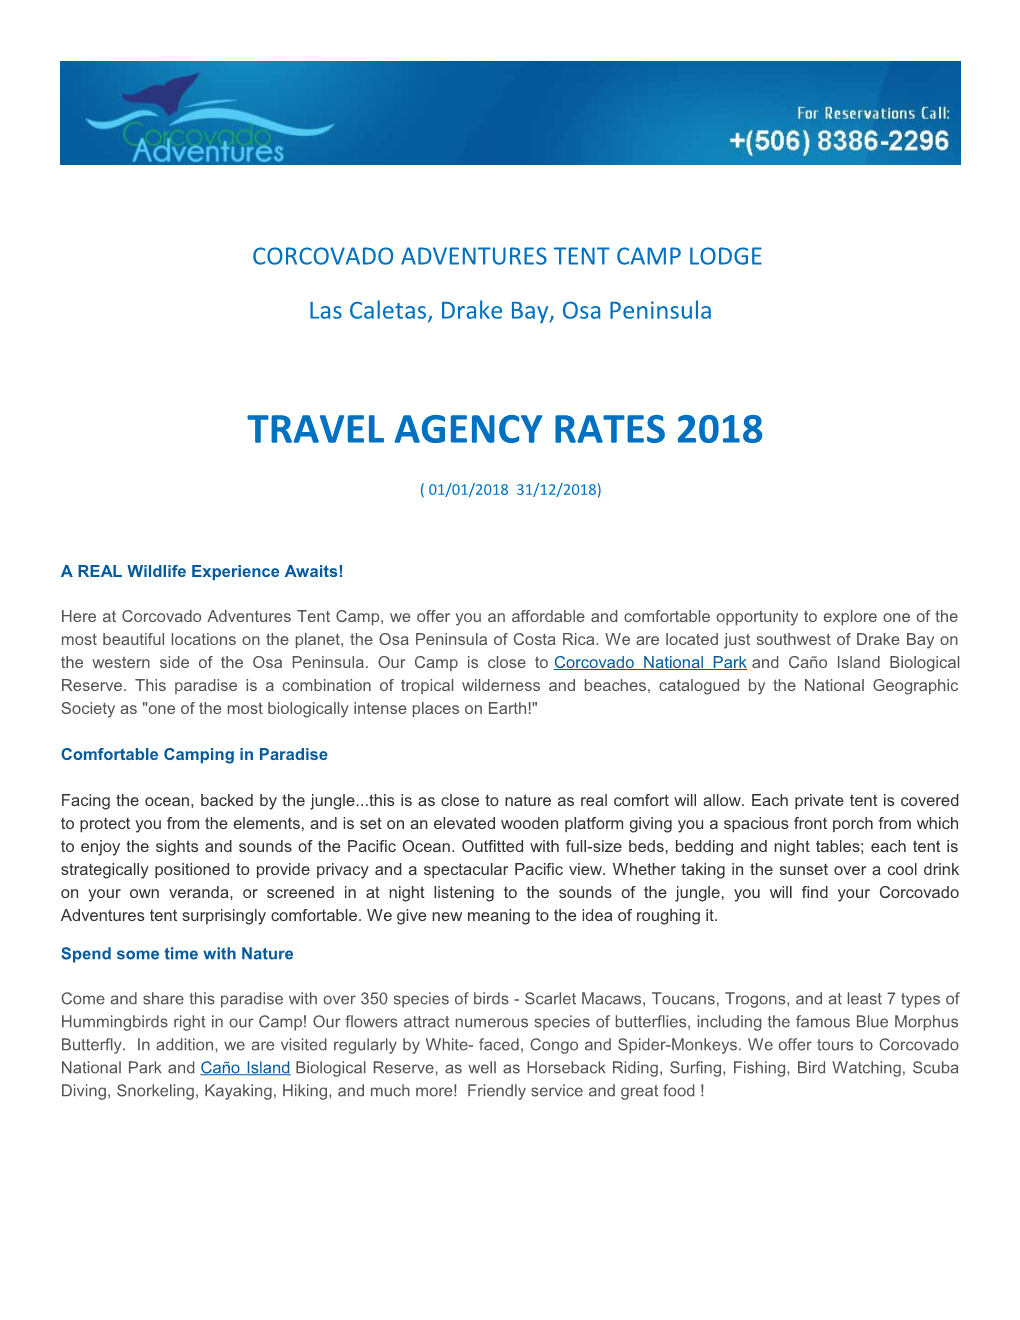 Corcovado Adventures Tent Camp Lodge